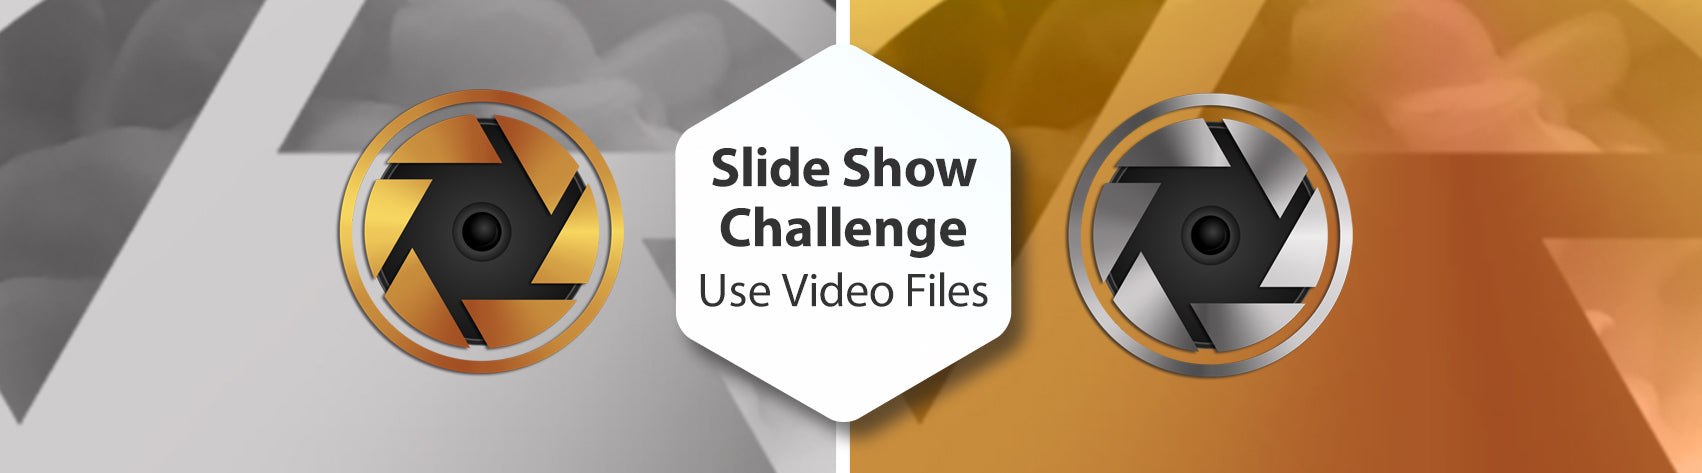 Slide Show Challenge - Use Video Files